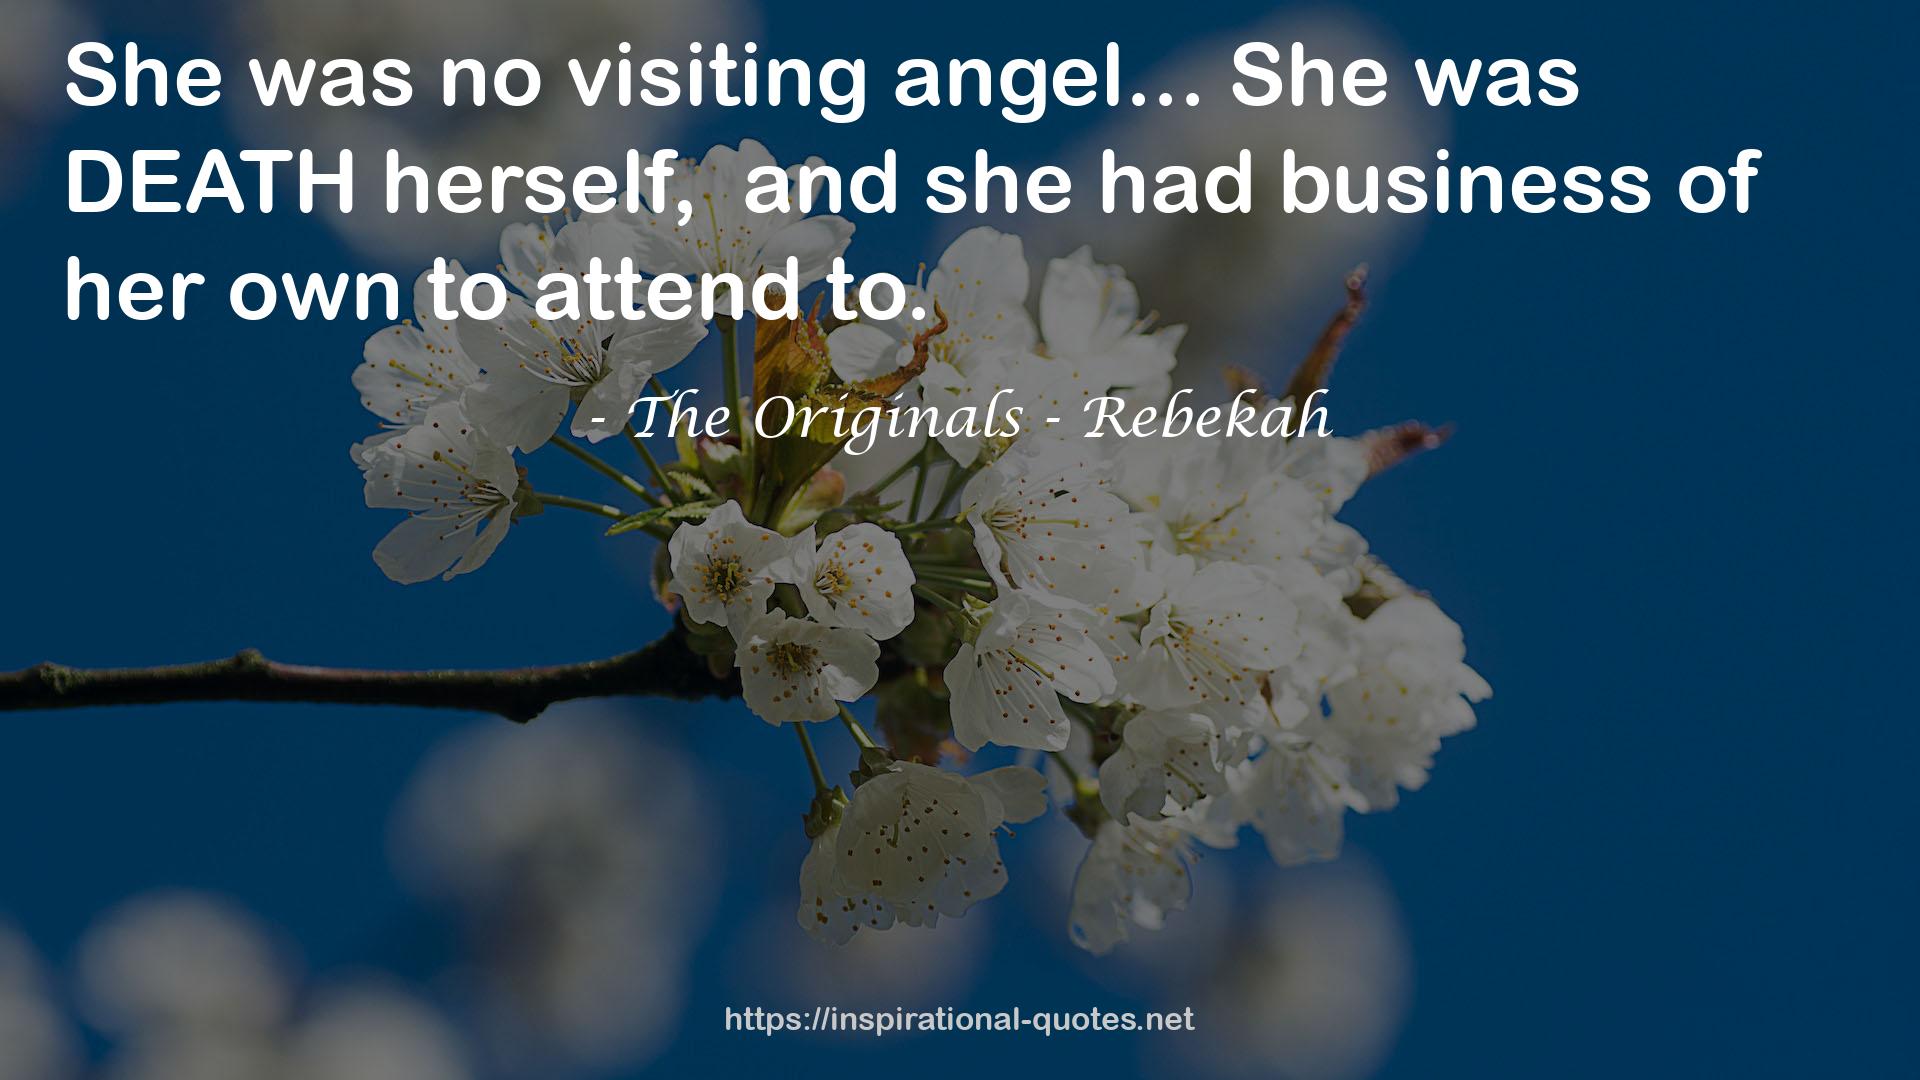 The Originals - Rebekah QUOTES